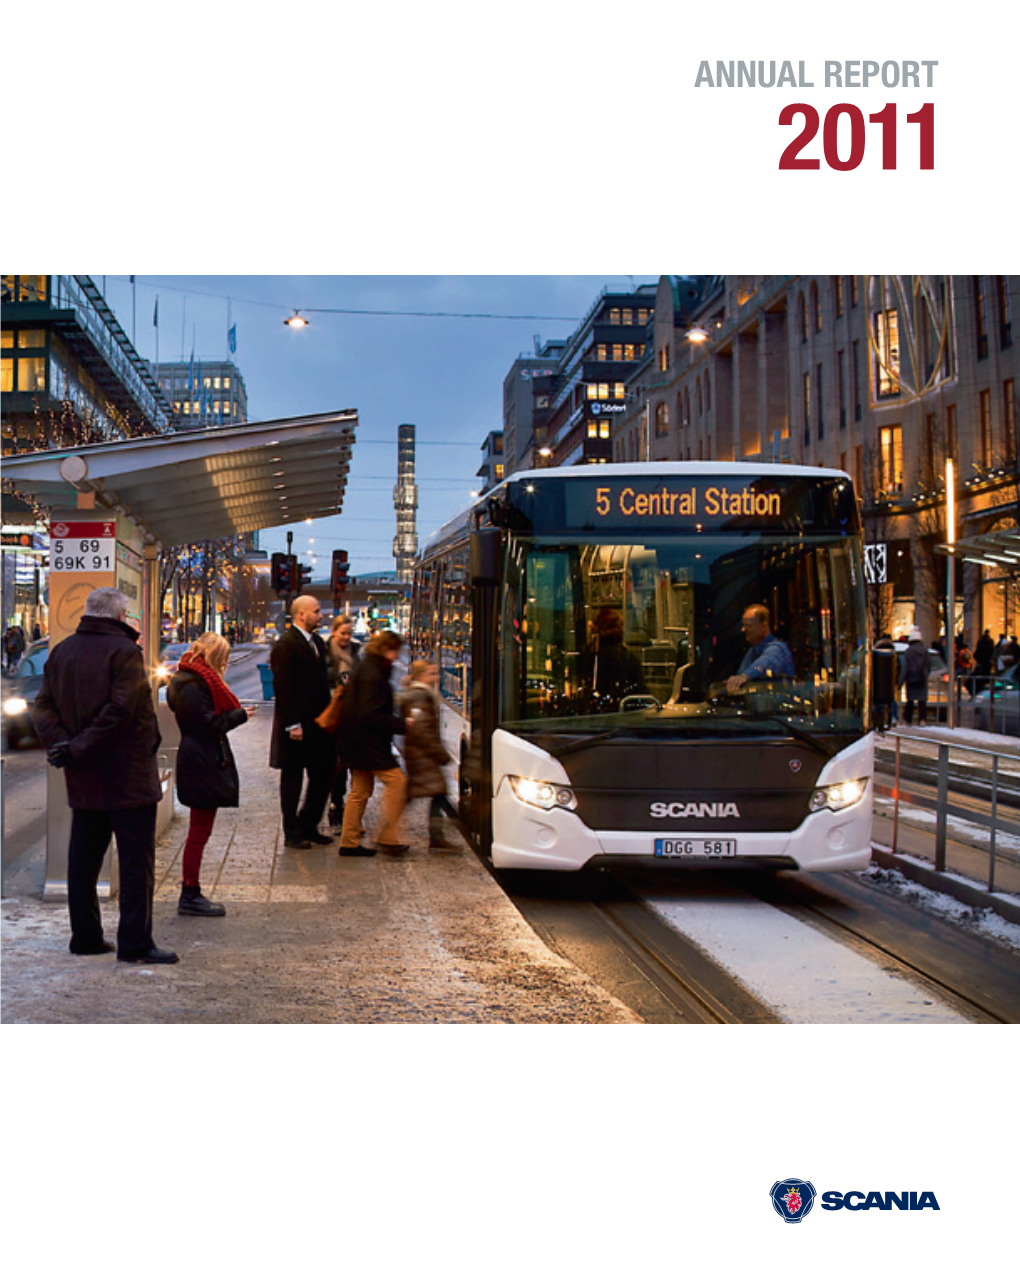 Scania Annual Report 2011